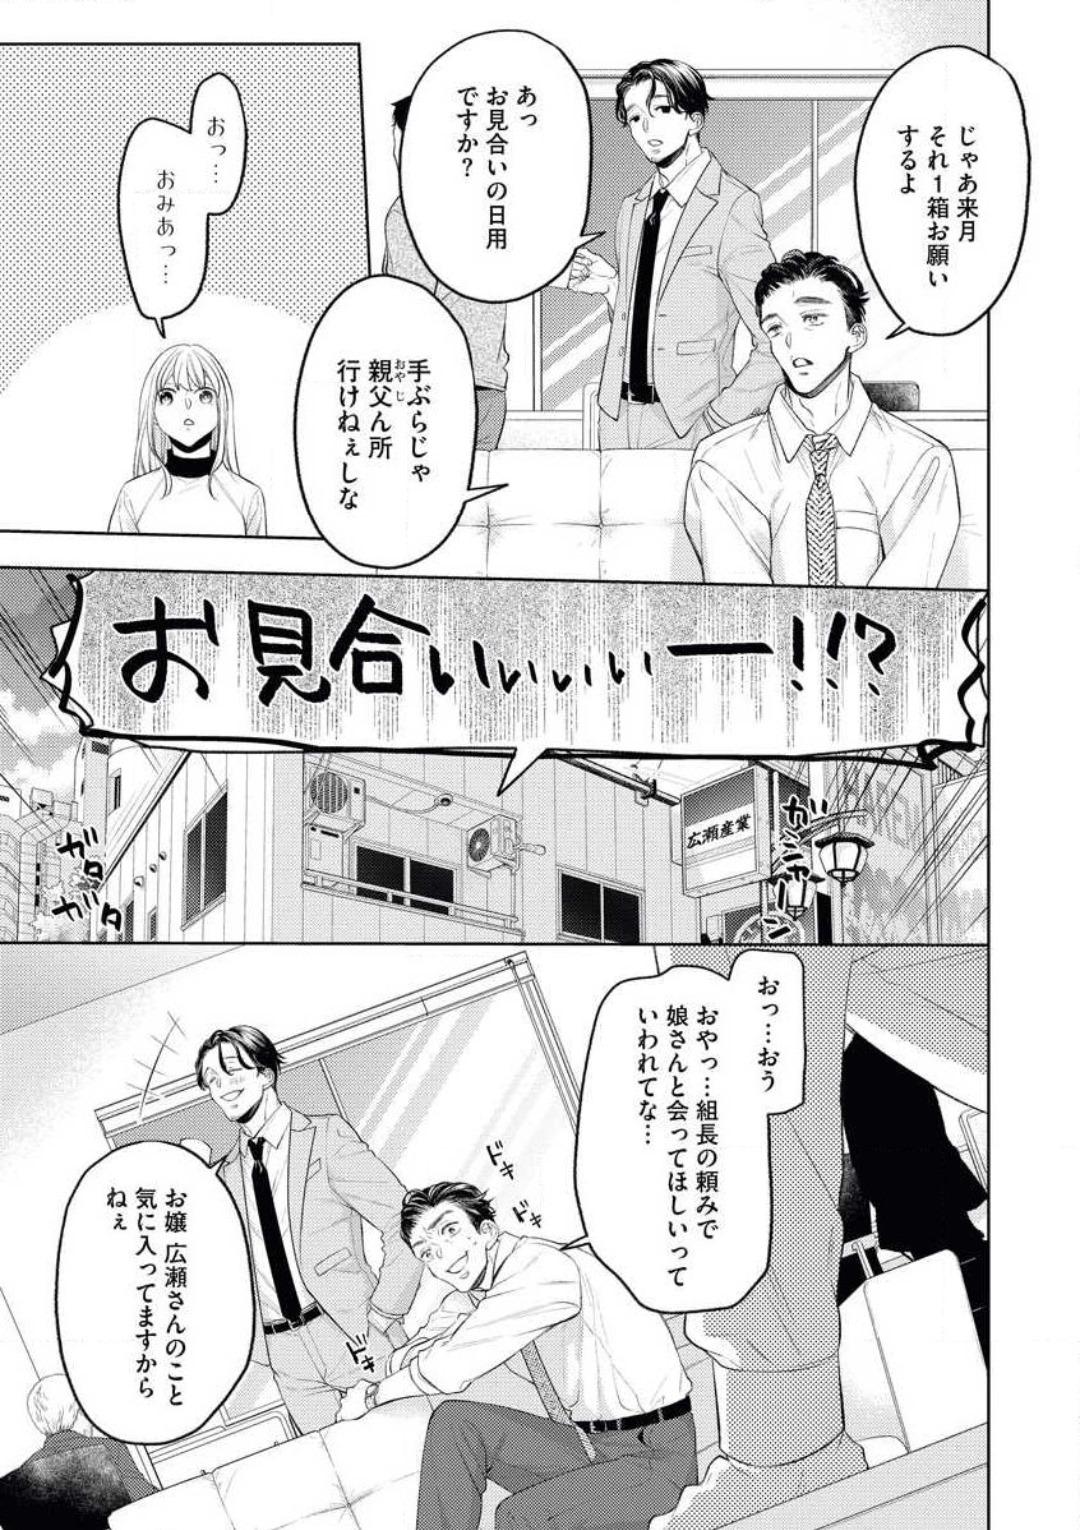 Nalgas Yakuza no Kakehiki wa Ijiwaru ni Amai Load - Page 8